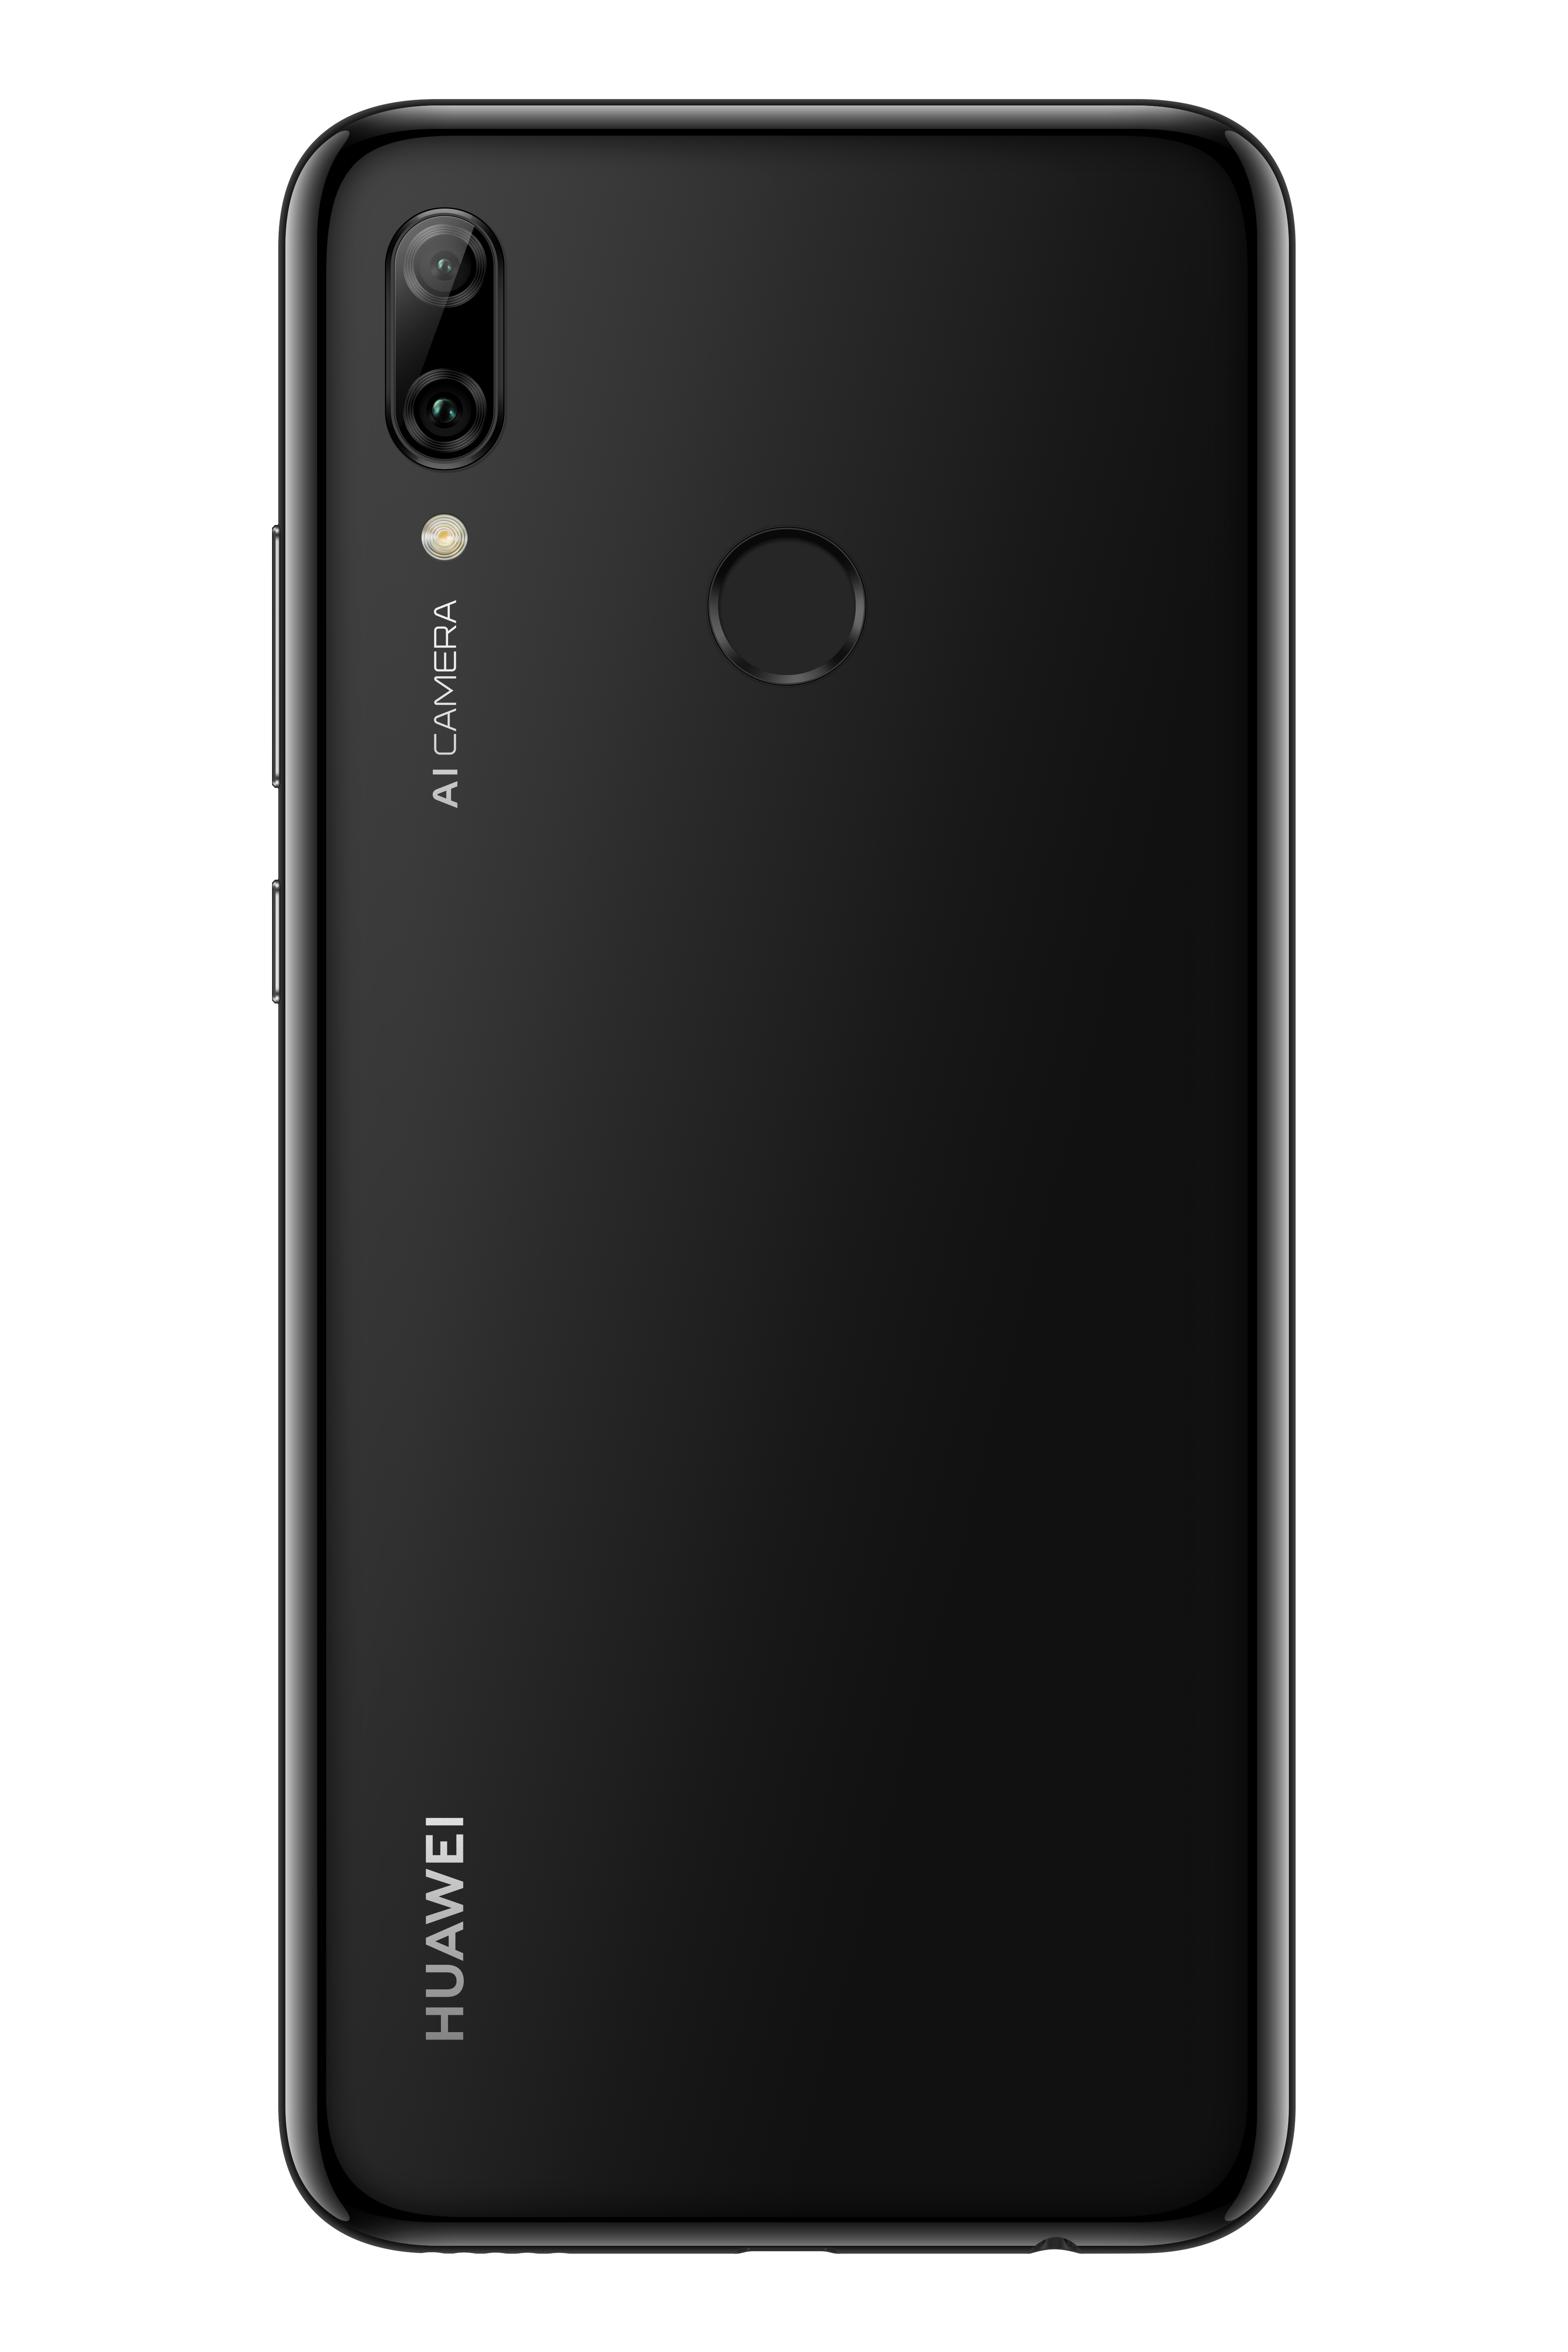 Huawei P smart 2019 Midnight Black